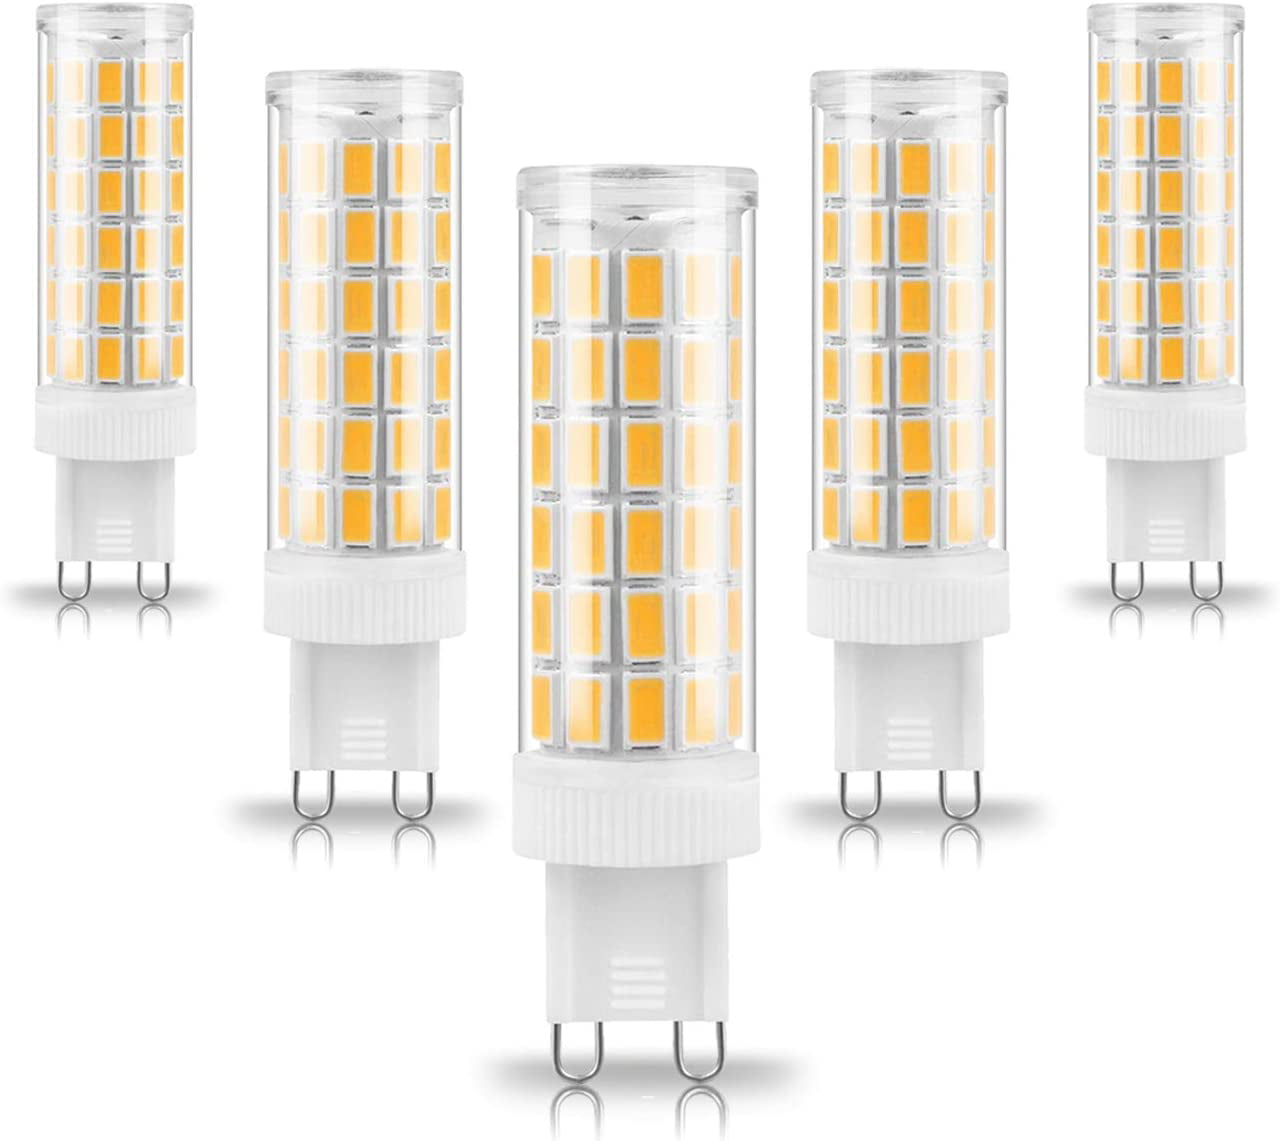 G9 Led Bulbs 80W 100W T4 Clear Halogen Equivalent,1000lm,3000K Soft Warm White,AC120V G9 8W Bi-pin LED Corn Light Bulb for Chandelier Wall Ceiling Floor Ligting,Non-Flicker,5Pack - Walmart.com